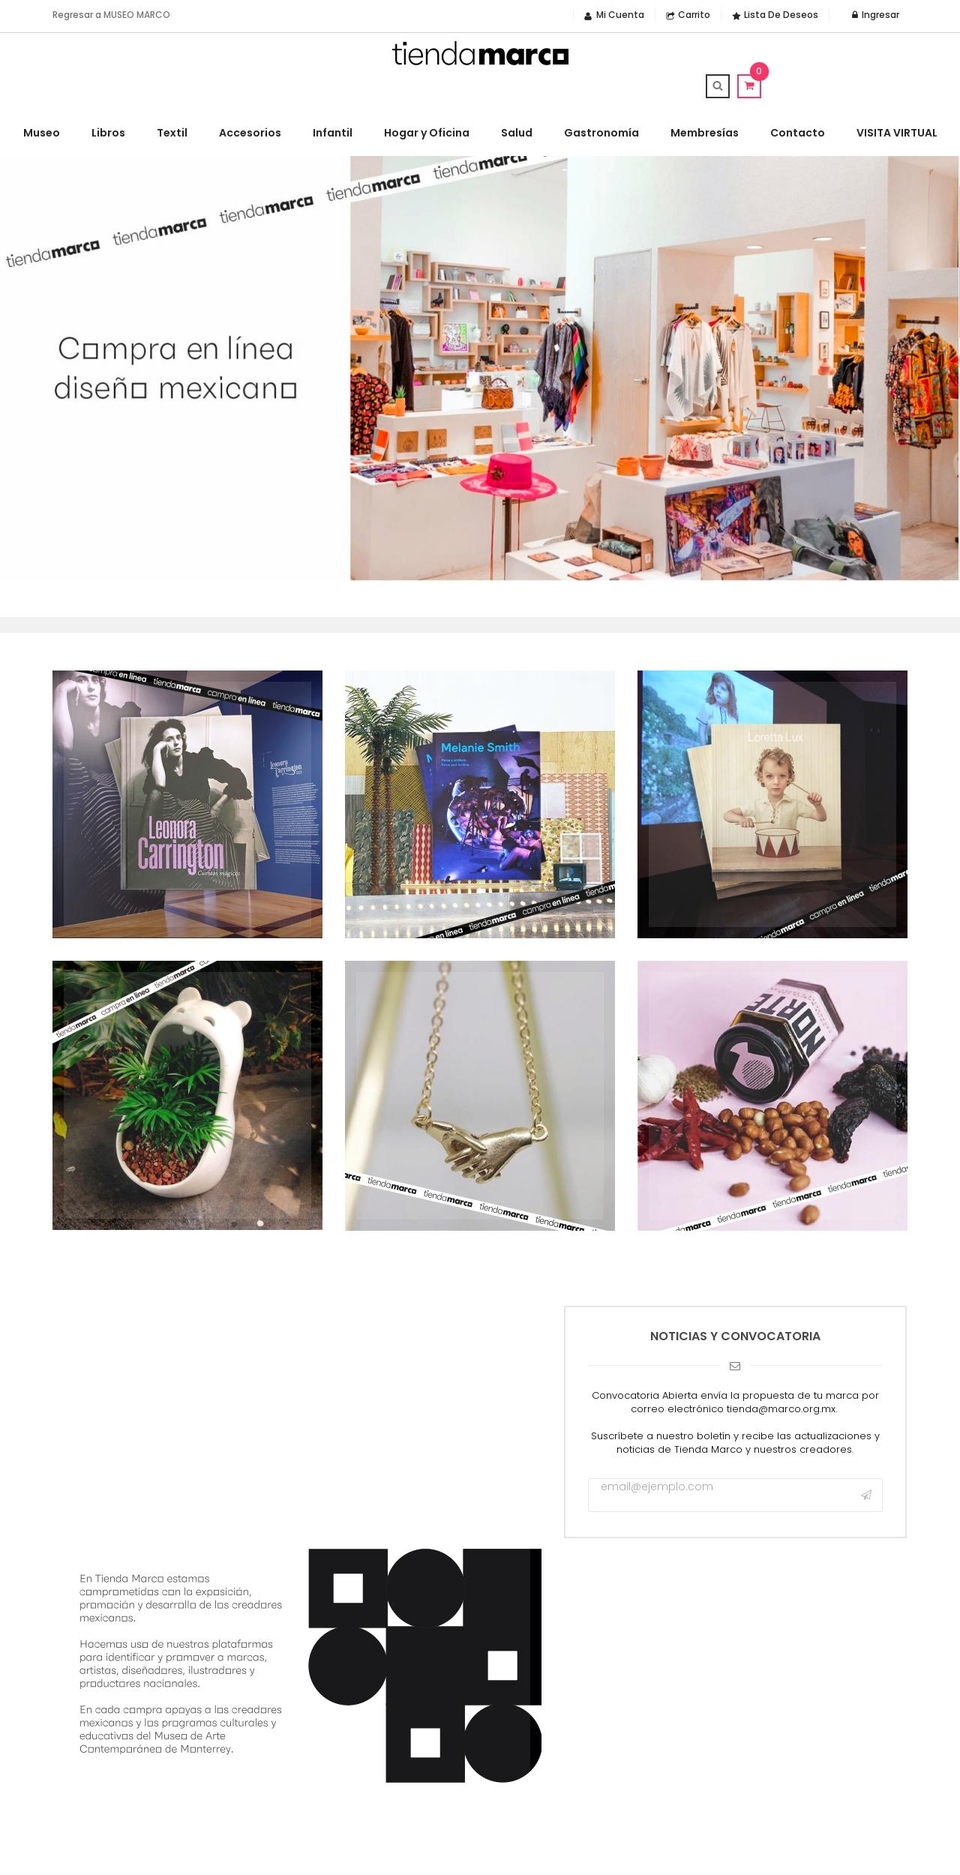 storemarco.art shopify website screenshot